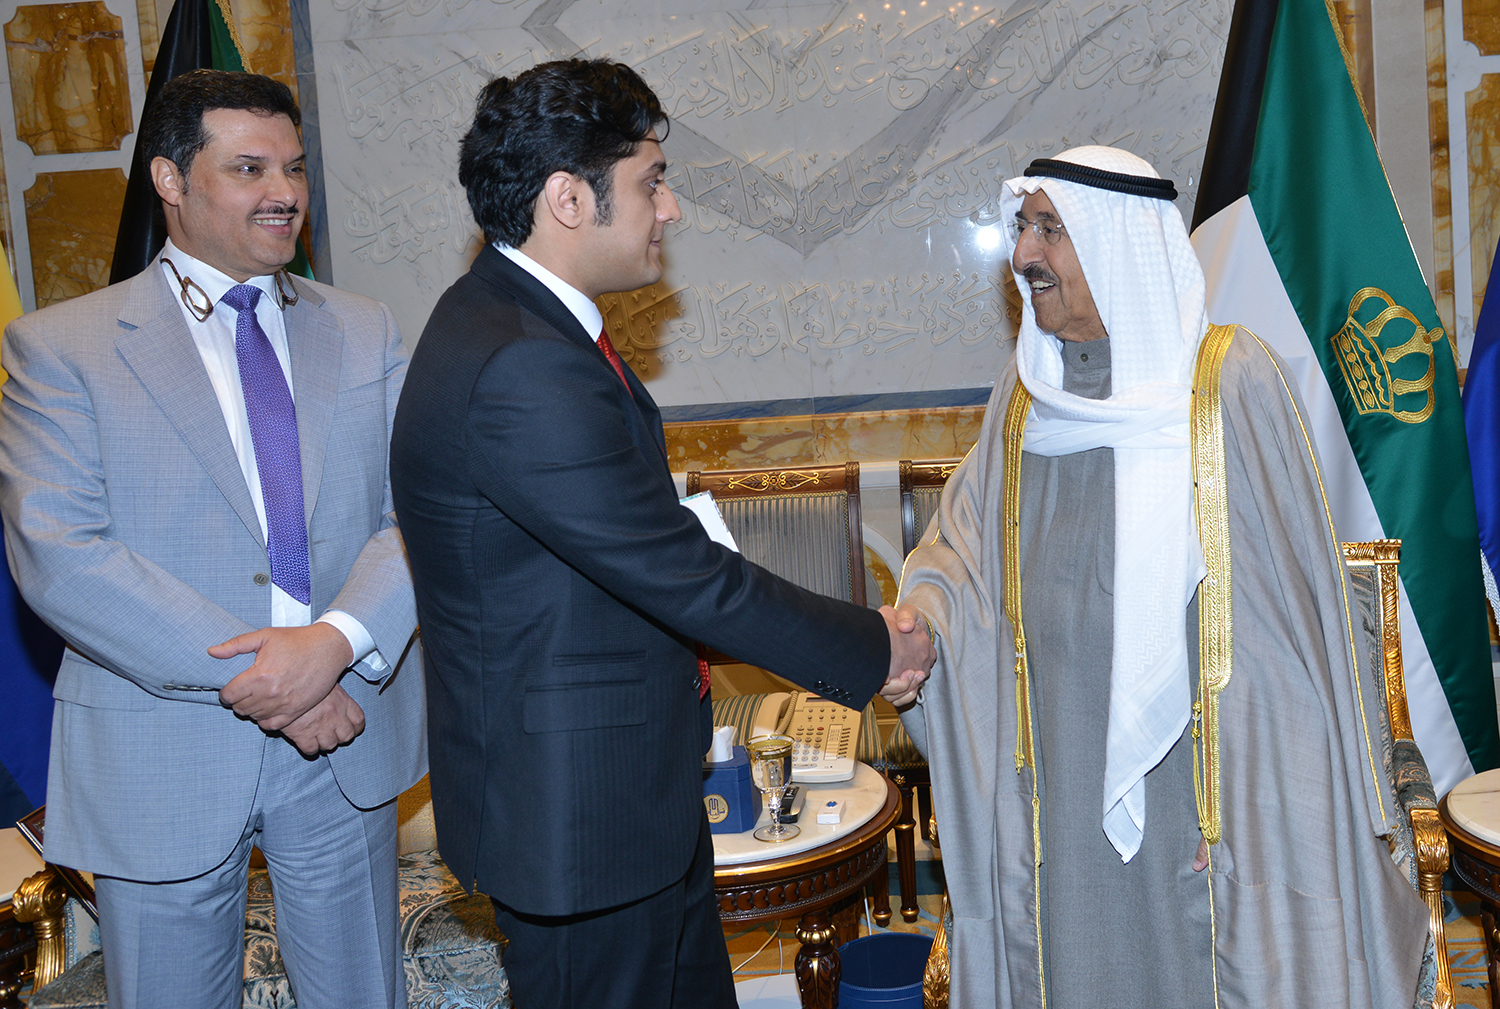 His Highness the Amir Sheikh Sabah Al-Ahmad Al-Jaber Al-Sabah receives Dr. Zeyad Abdullah Al-Kanderi